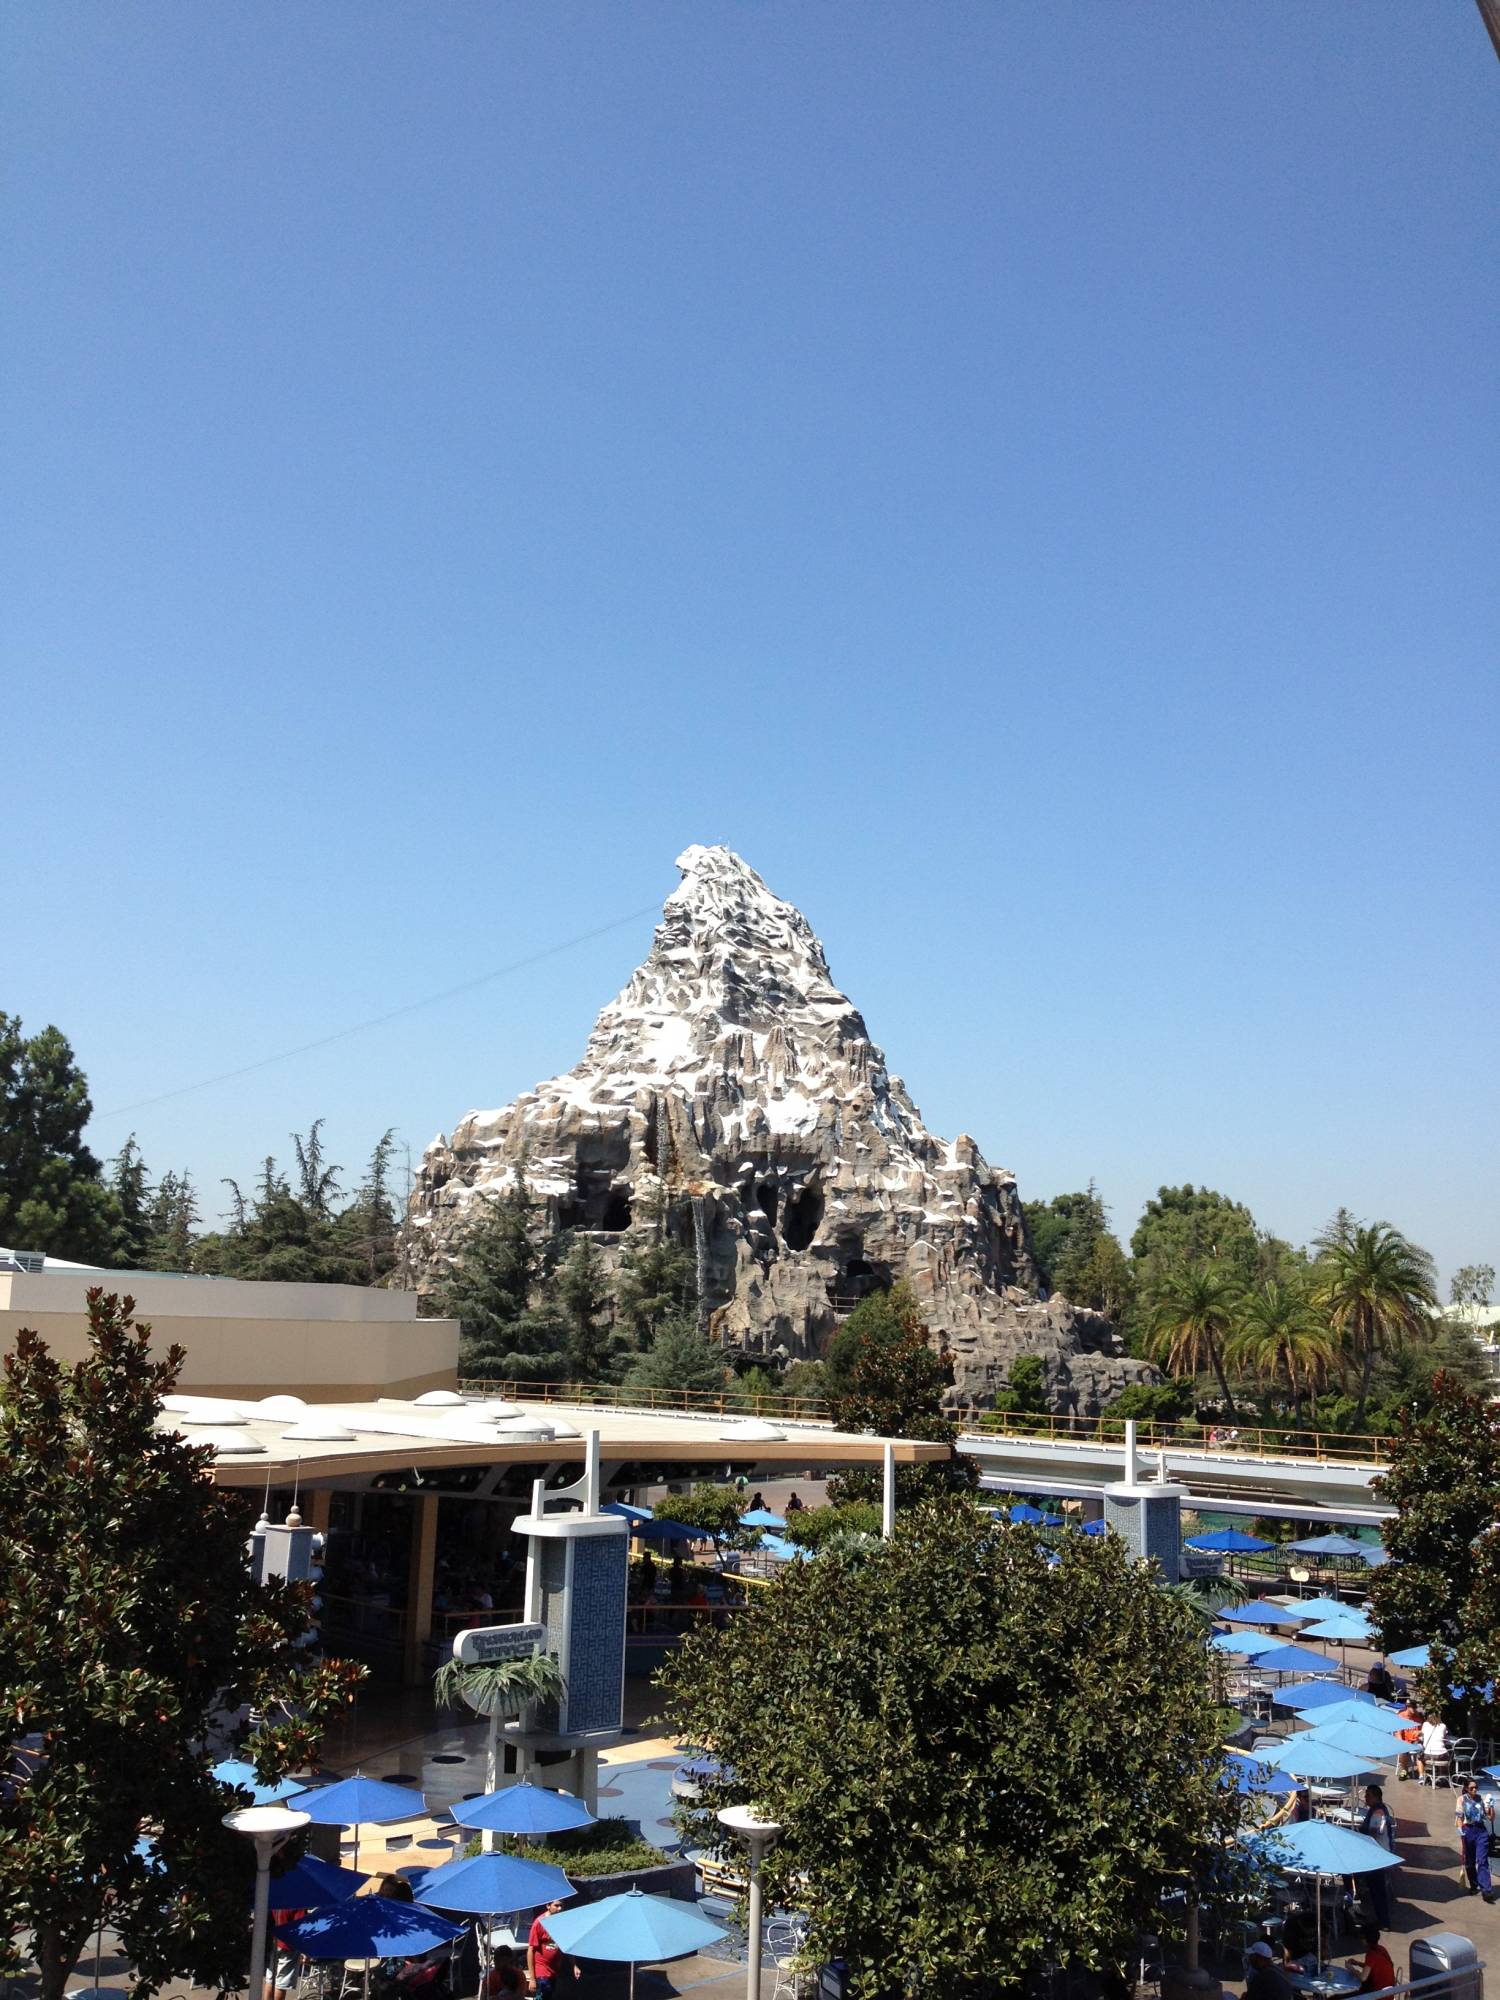 Matterhorn Bobsleds and Tomorrowland Terrace - Disneyland